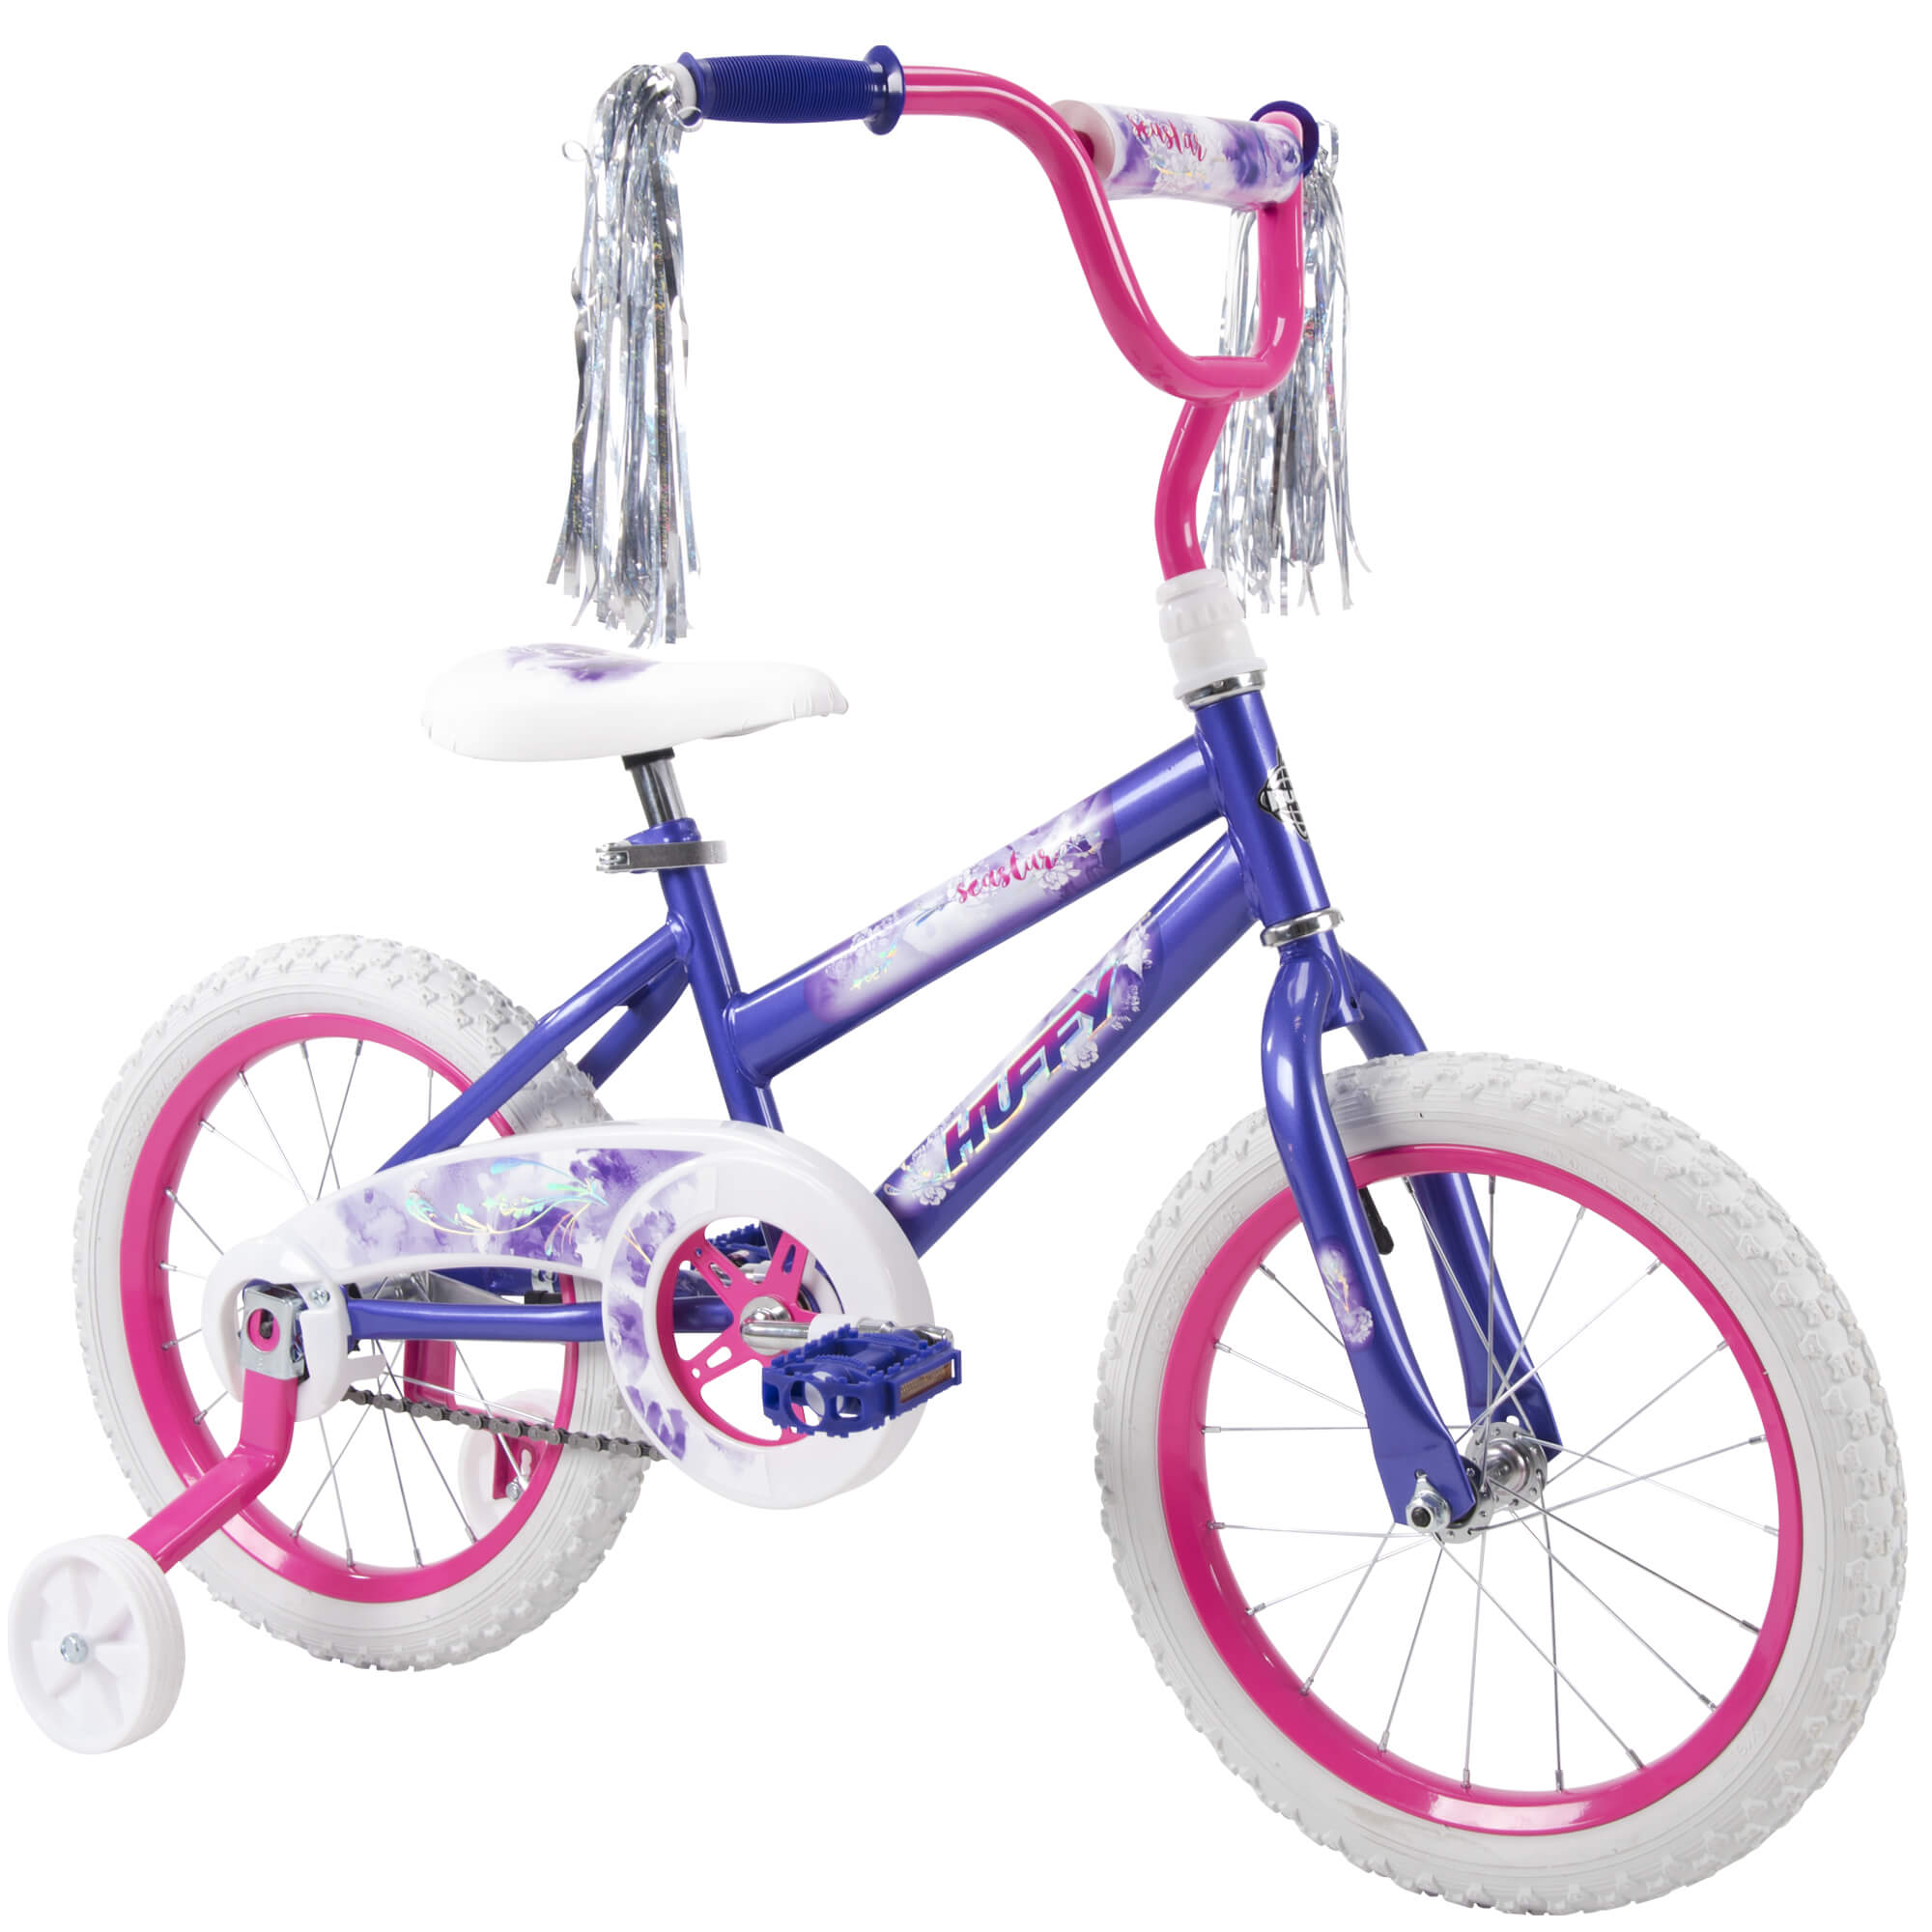 Huffy 16" Sea Star EZ Build Kids Bike for Girls', Purple - image 5 of 5